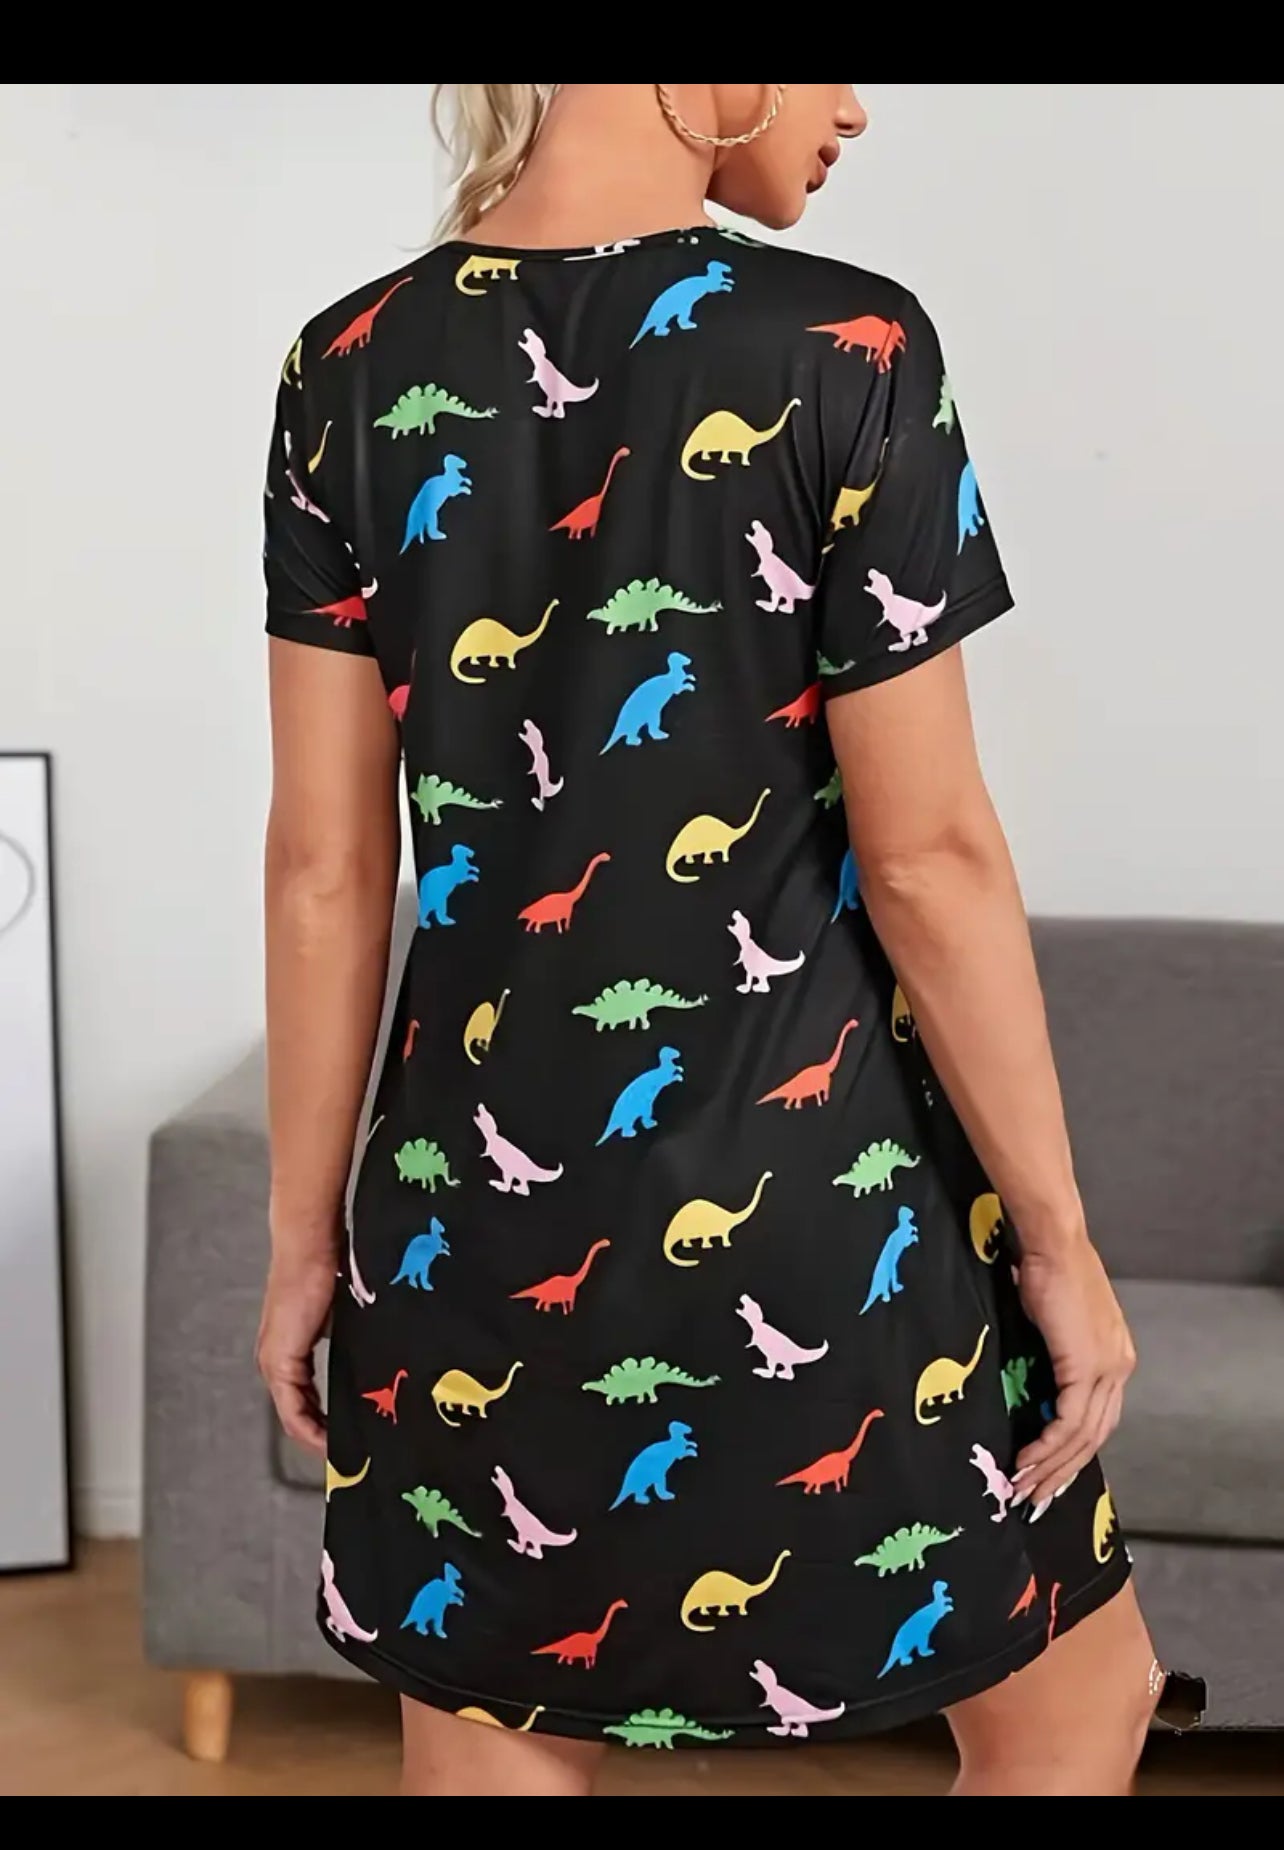 Colorful Dinosaur, Crew Neck Short Sleeve, Sleepwear, Long, Short or Tee